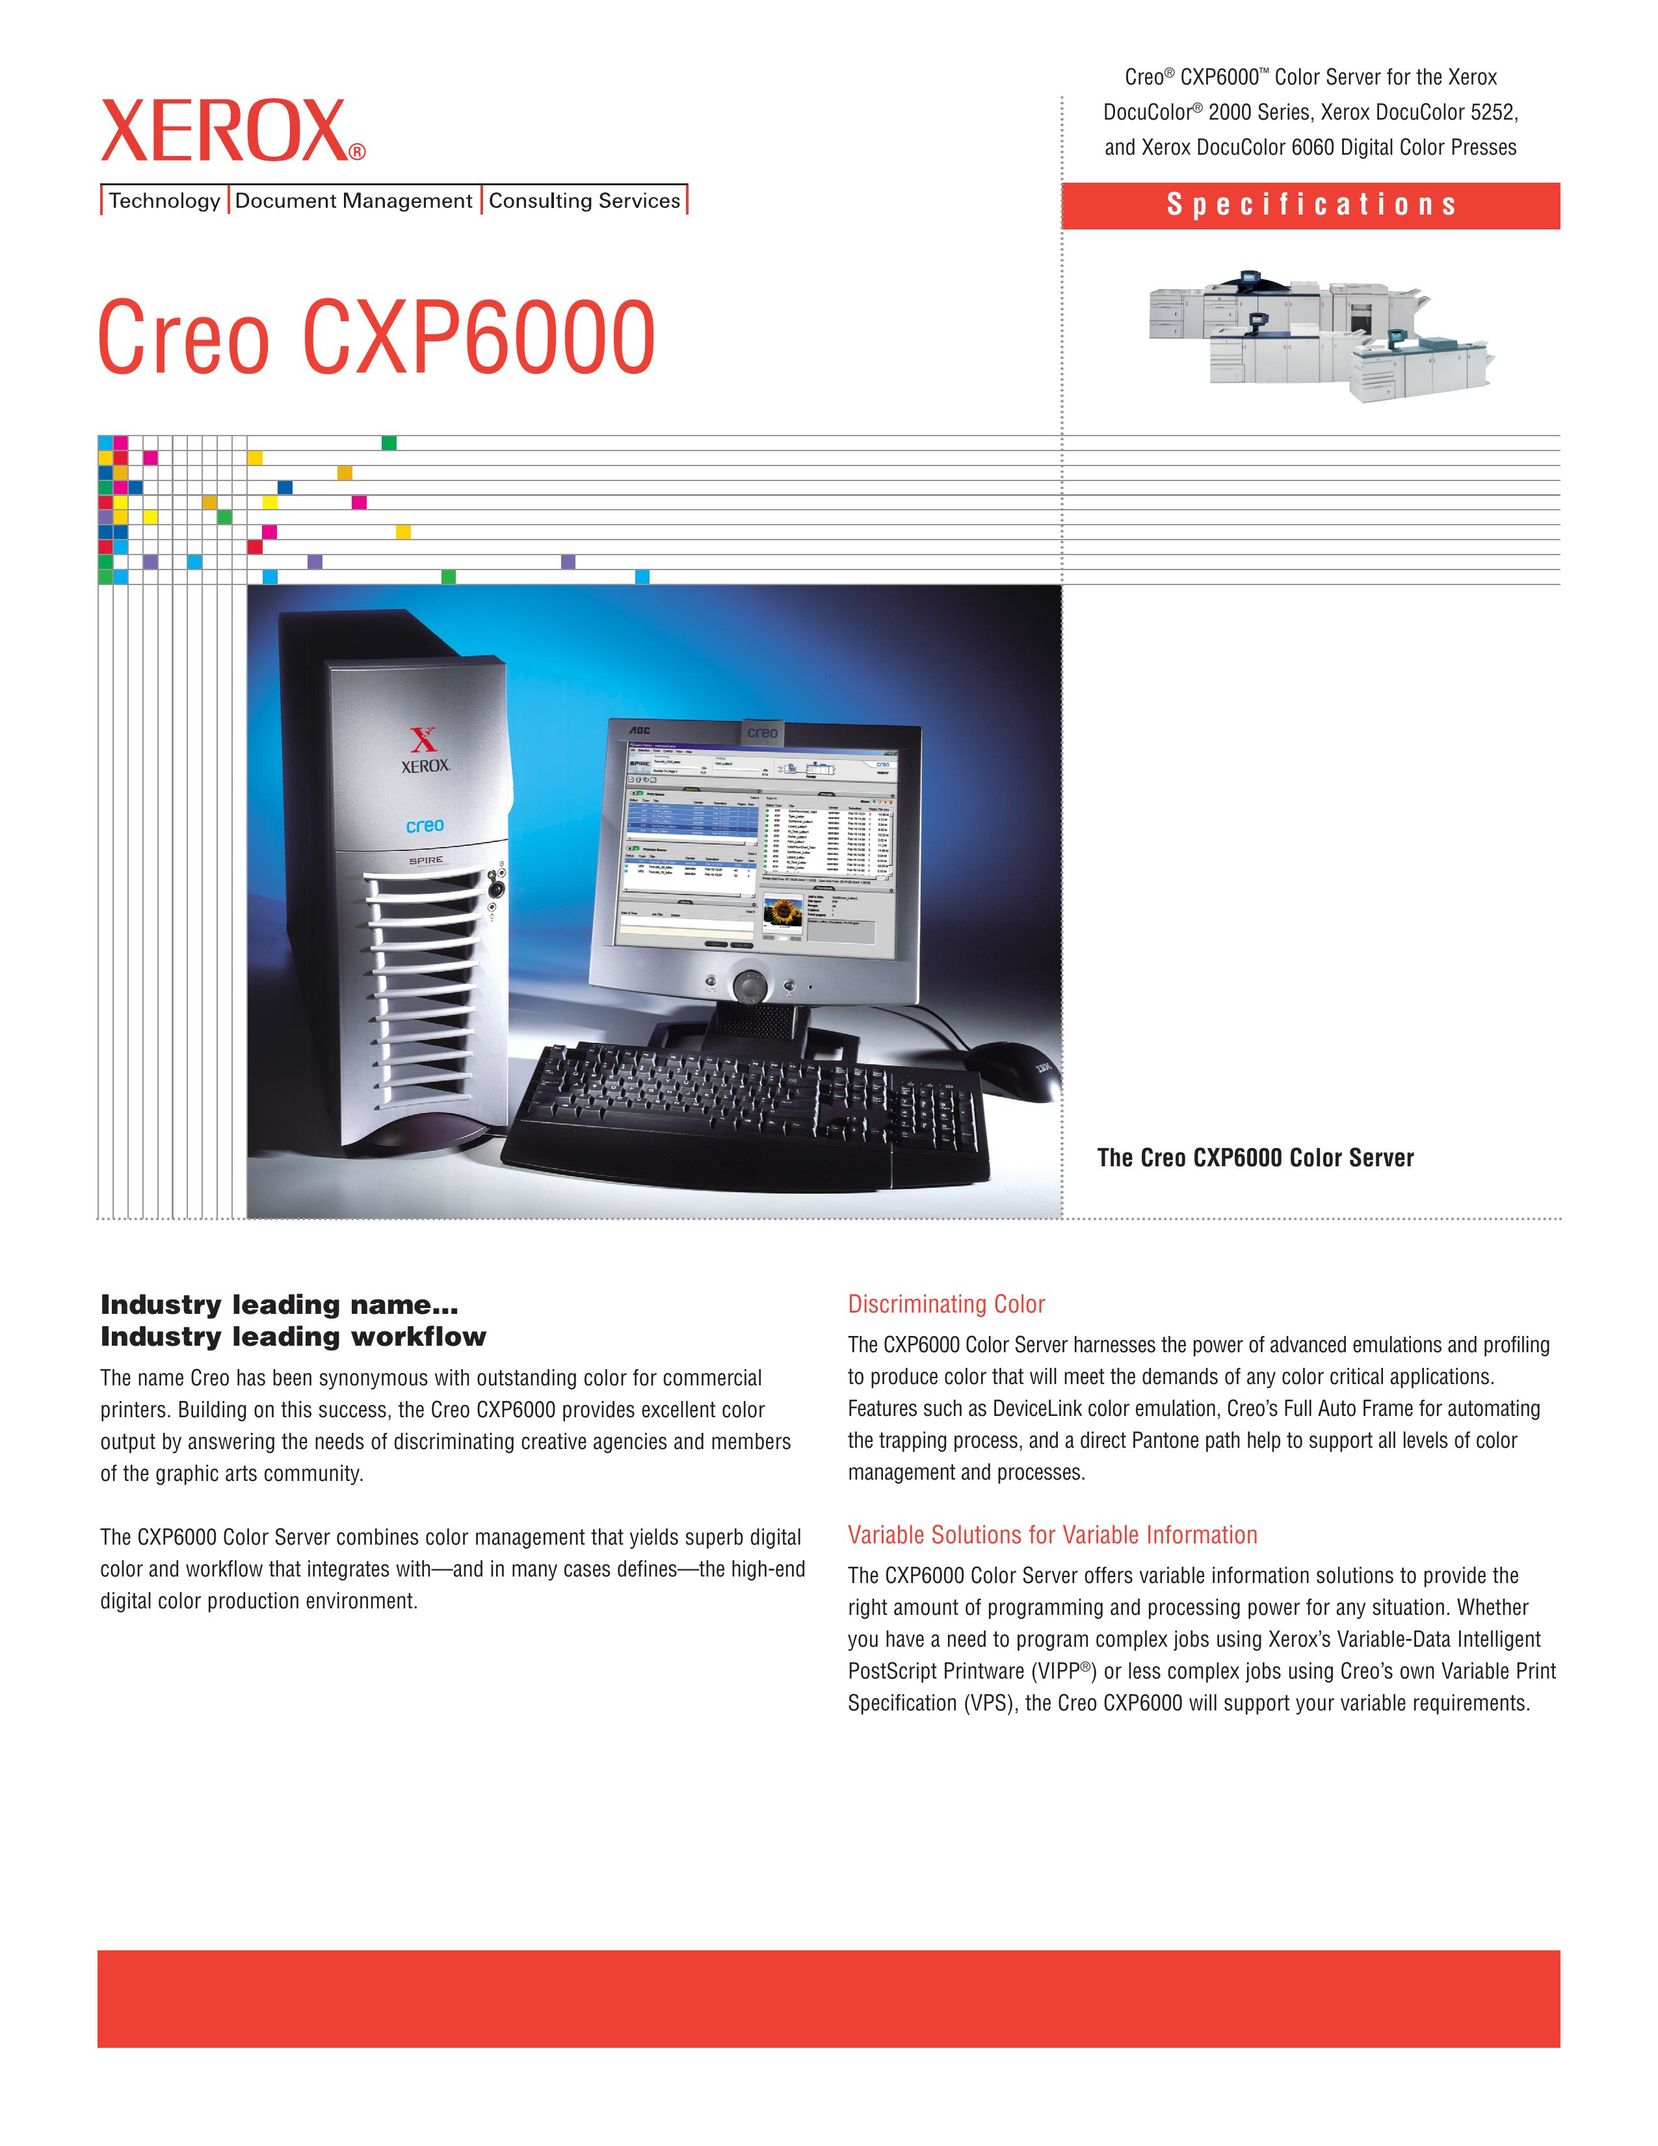 Xerox CXP6000 Server User Manual